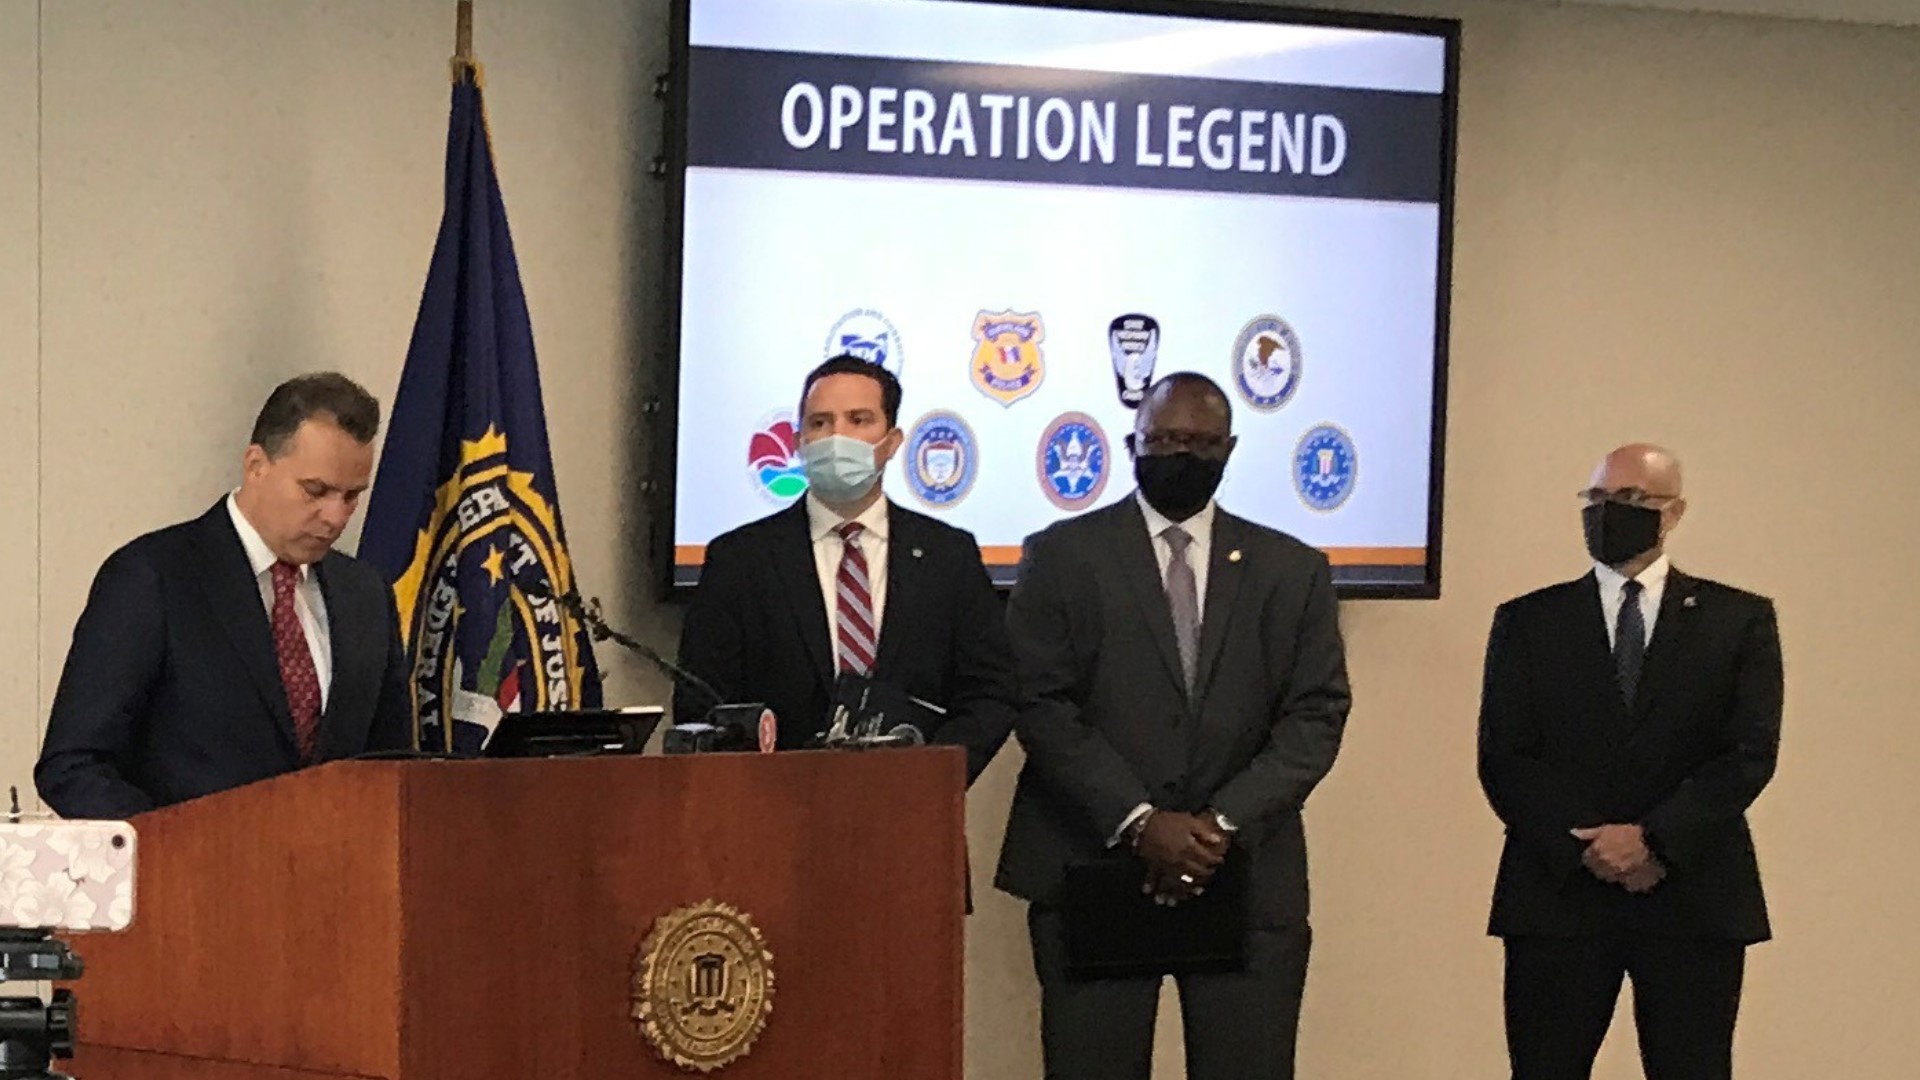 'Operation Legend' has arrived in the city of Cleveland. U.S. Attorney Justin Herdman said Operation Legend is a violent crime reduction effort.